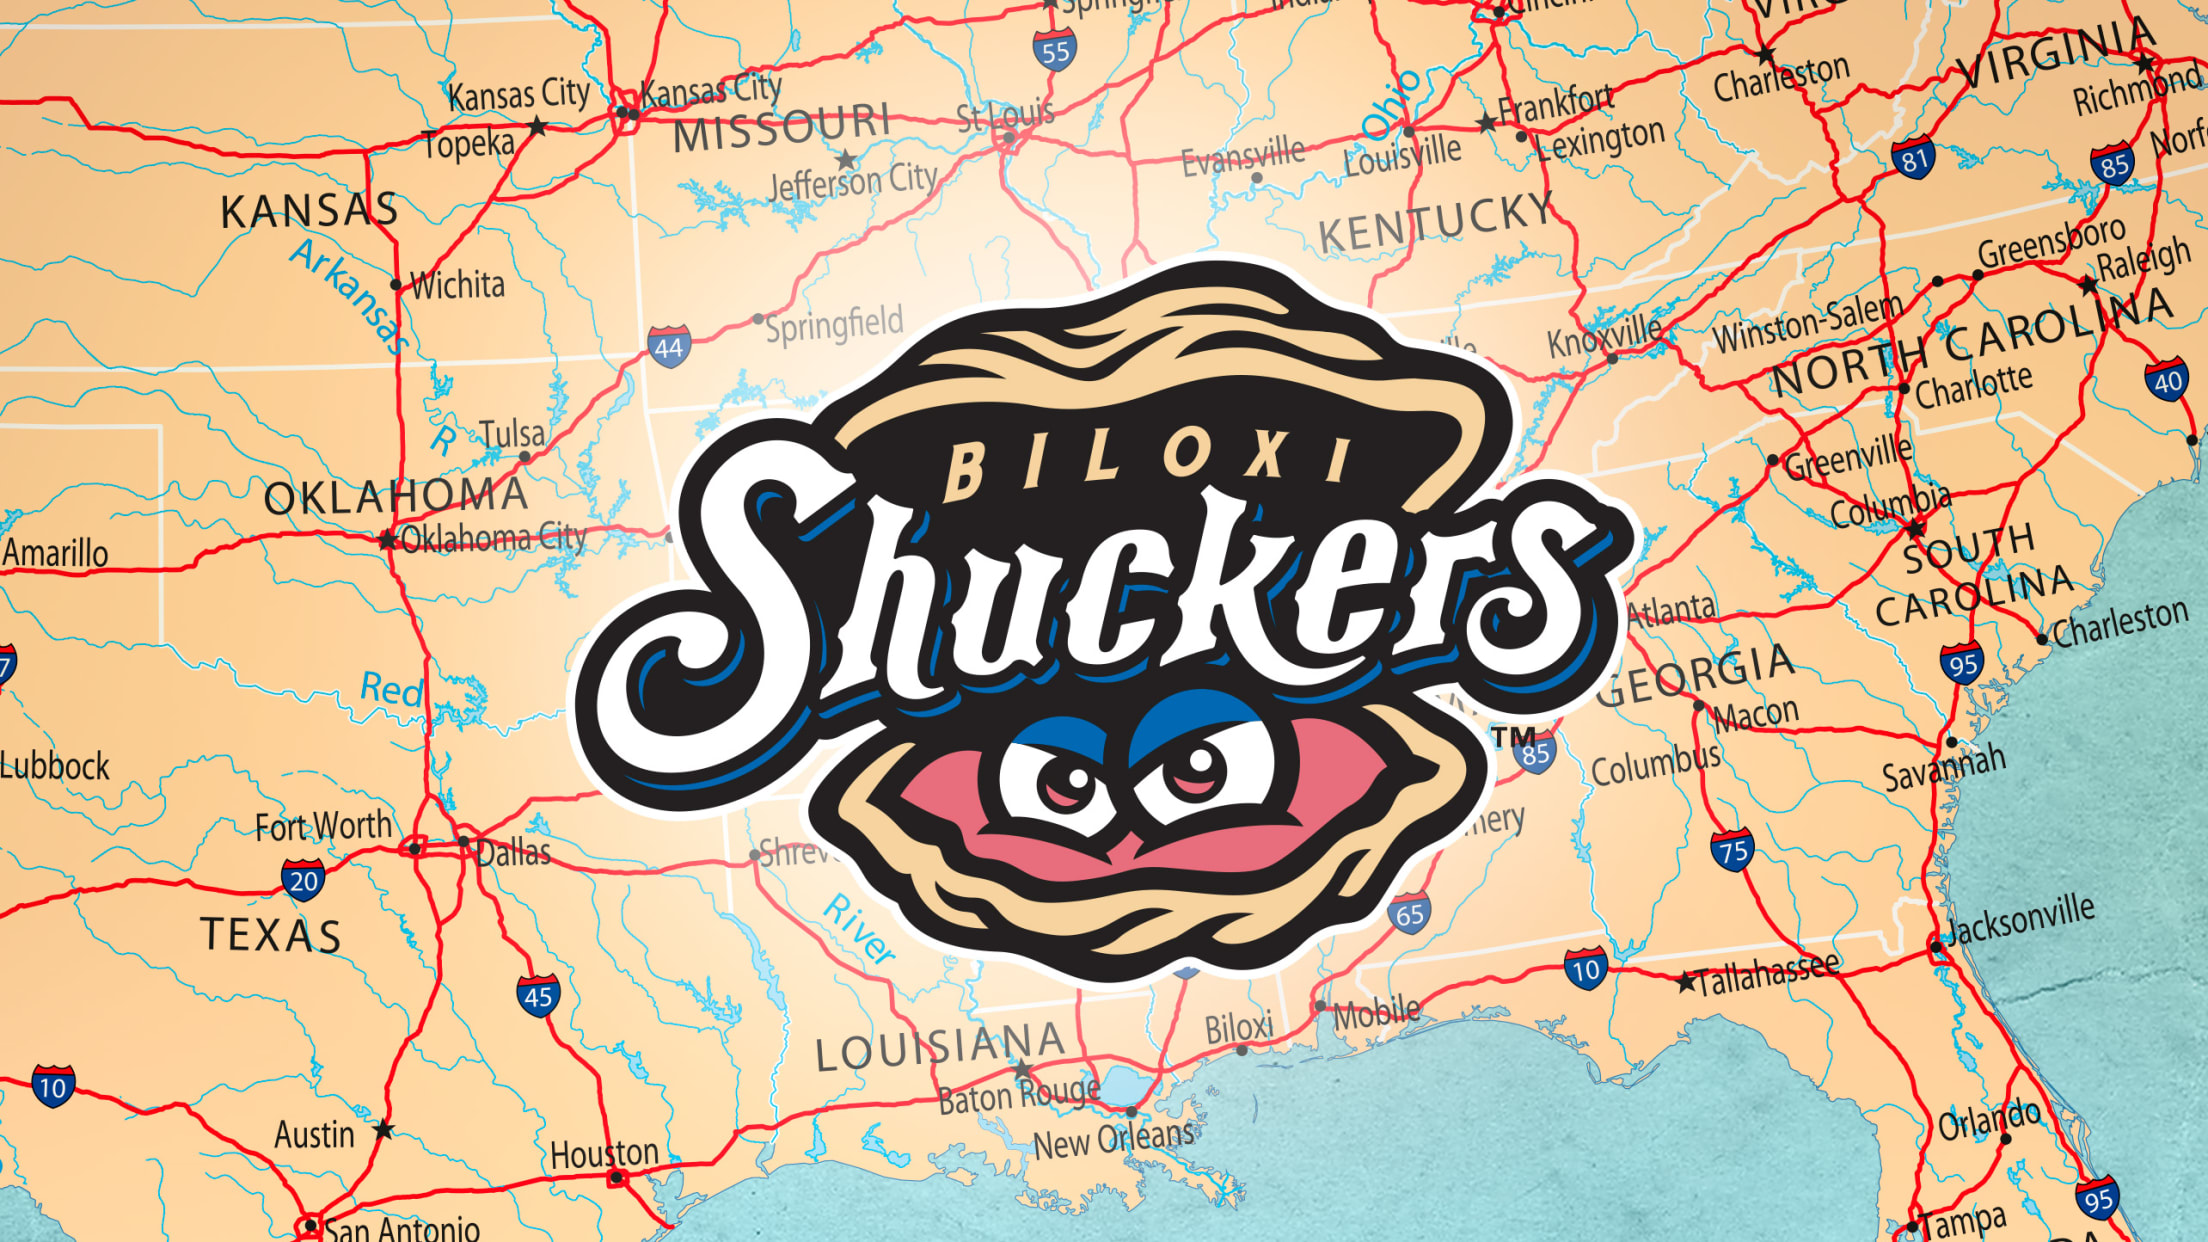 Biloxi Shukers - Mickey's Place